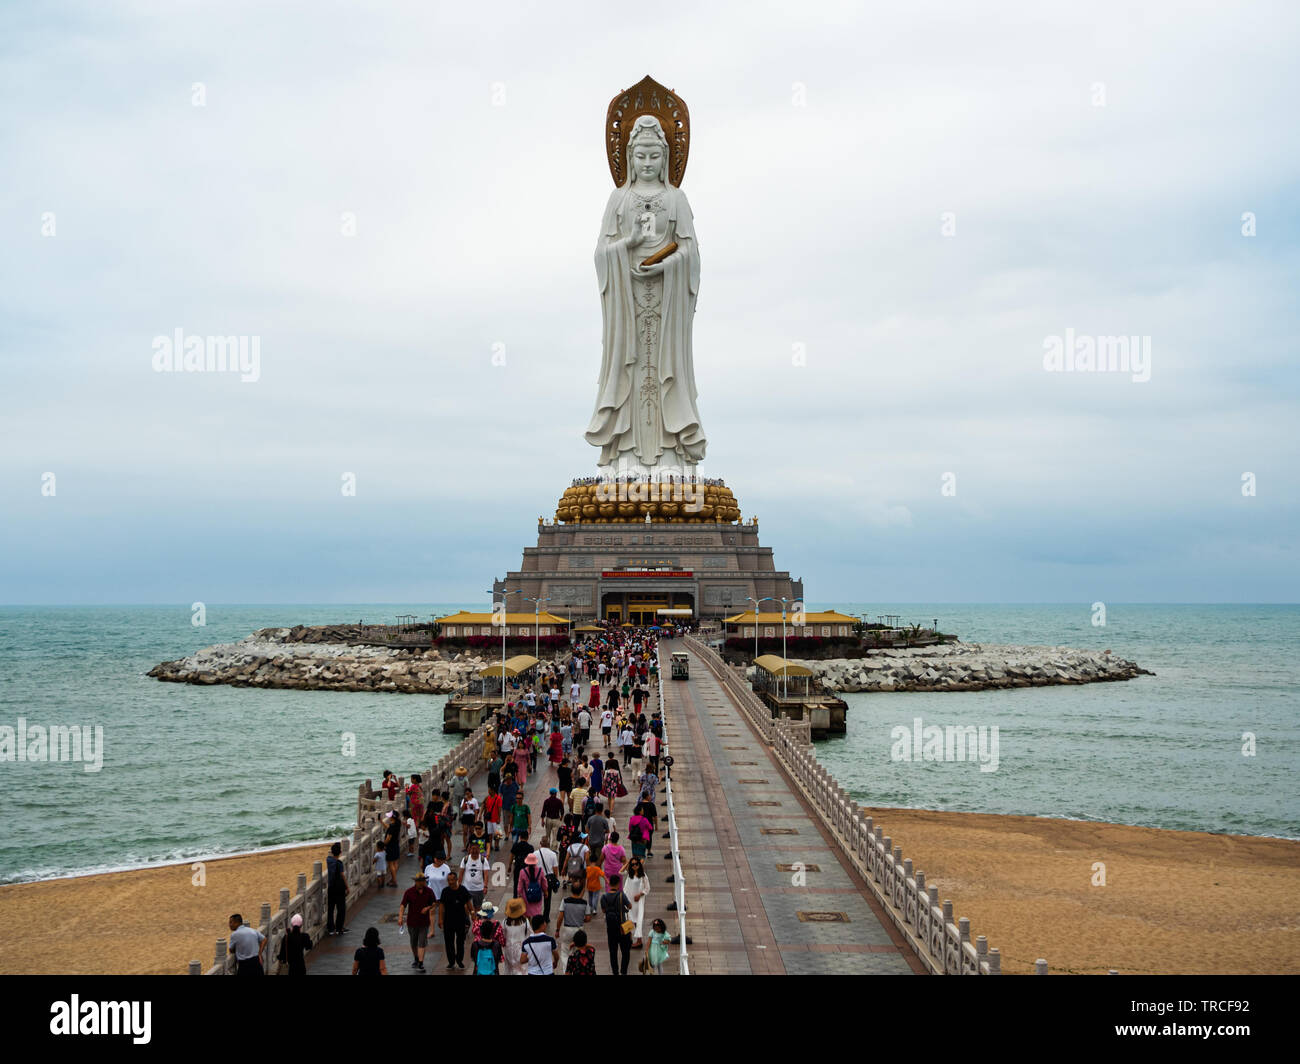 NANSHAN CULTURAL PARK, HAINAN, CHINA - Tourists and devotees at the statue of the Goddess of Mercy, Guanyin / Guan Yin / Kuan Yin / Kwan Yin. The stat Stock Photo